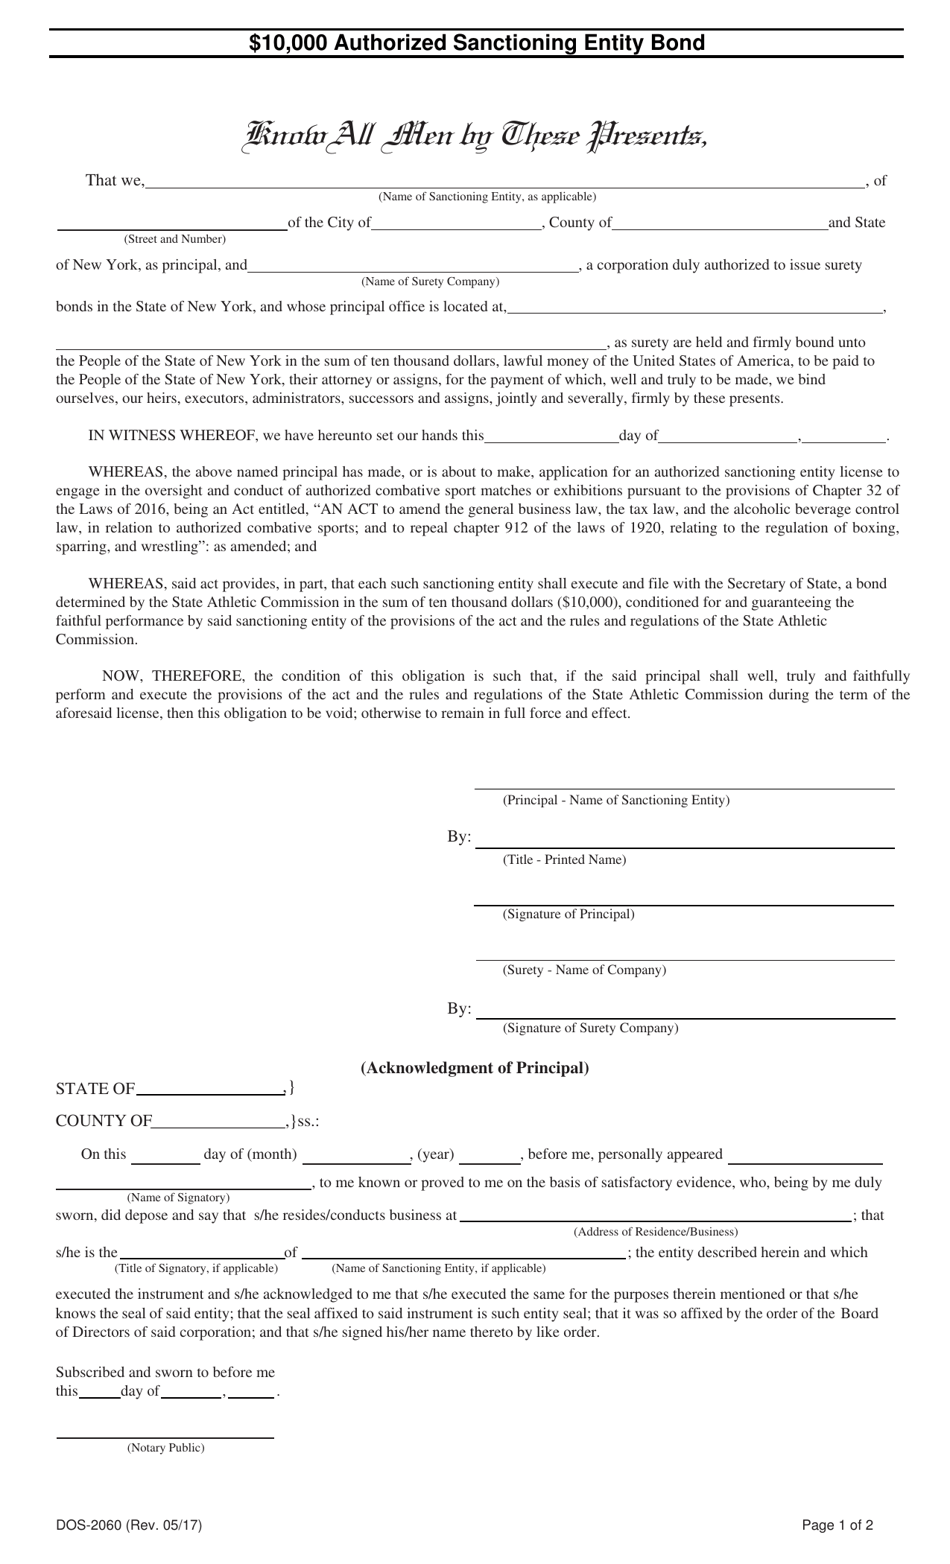 Form DOS-2060 $10,000 Authorized Sanctioning Entity Bond - New York, Page 1